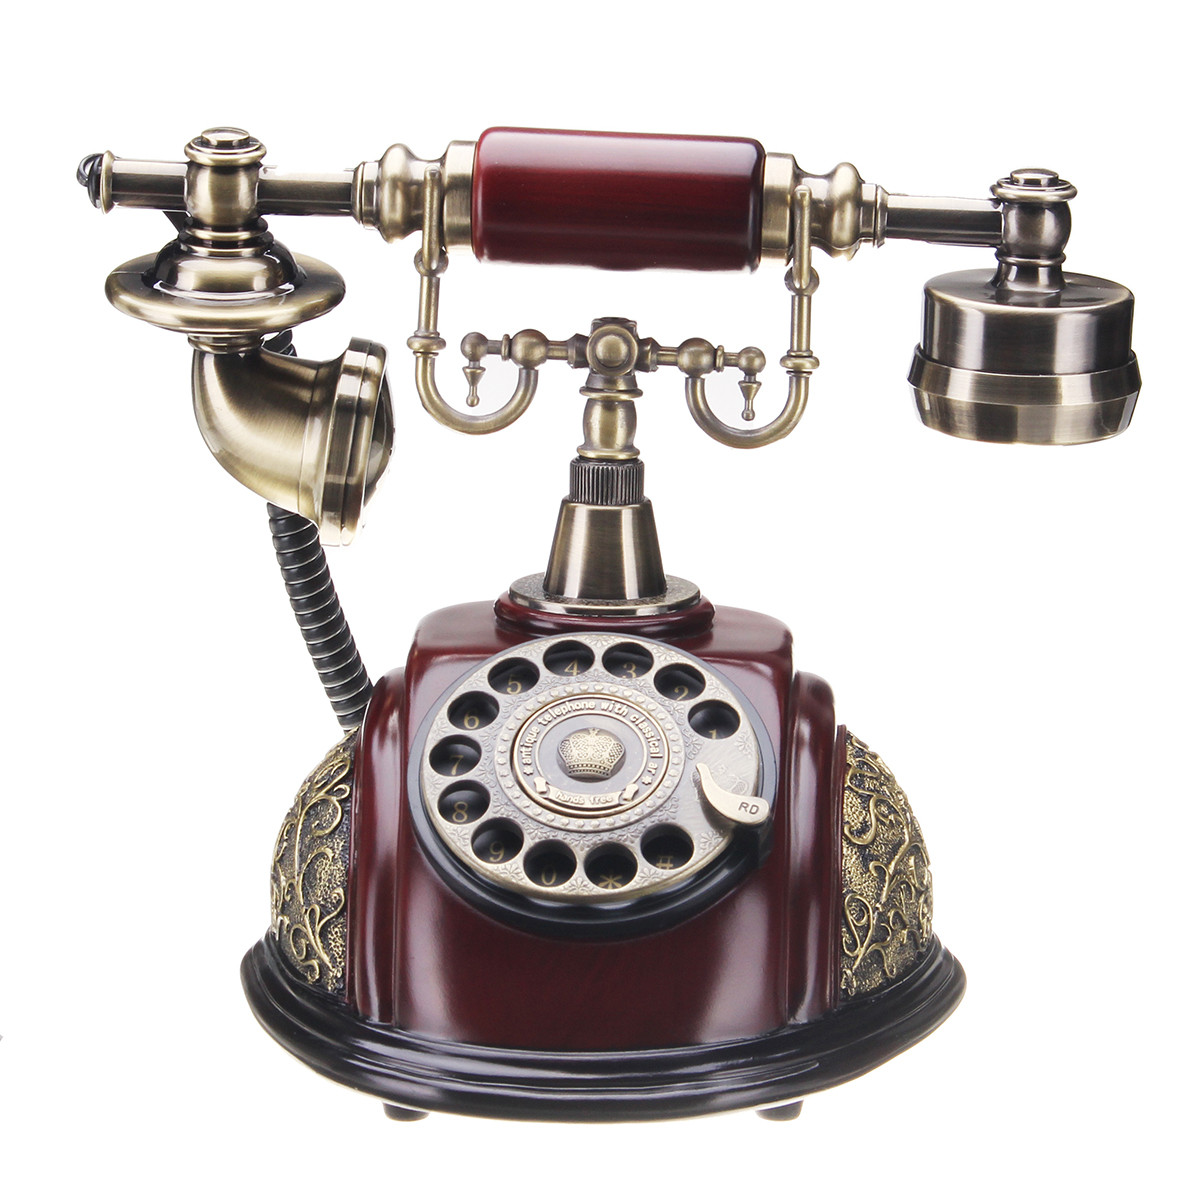 Старый стационарный телефон. Телефонный аппарат стационарный. Старинный телефонный аппарат. Ретро телефон. Стационарный телефон ретро.